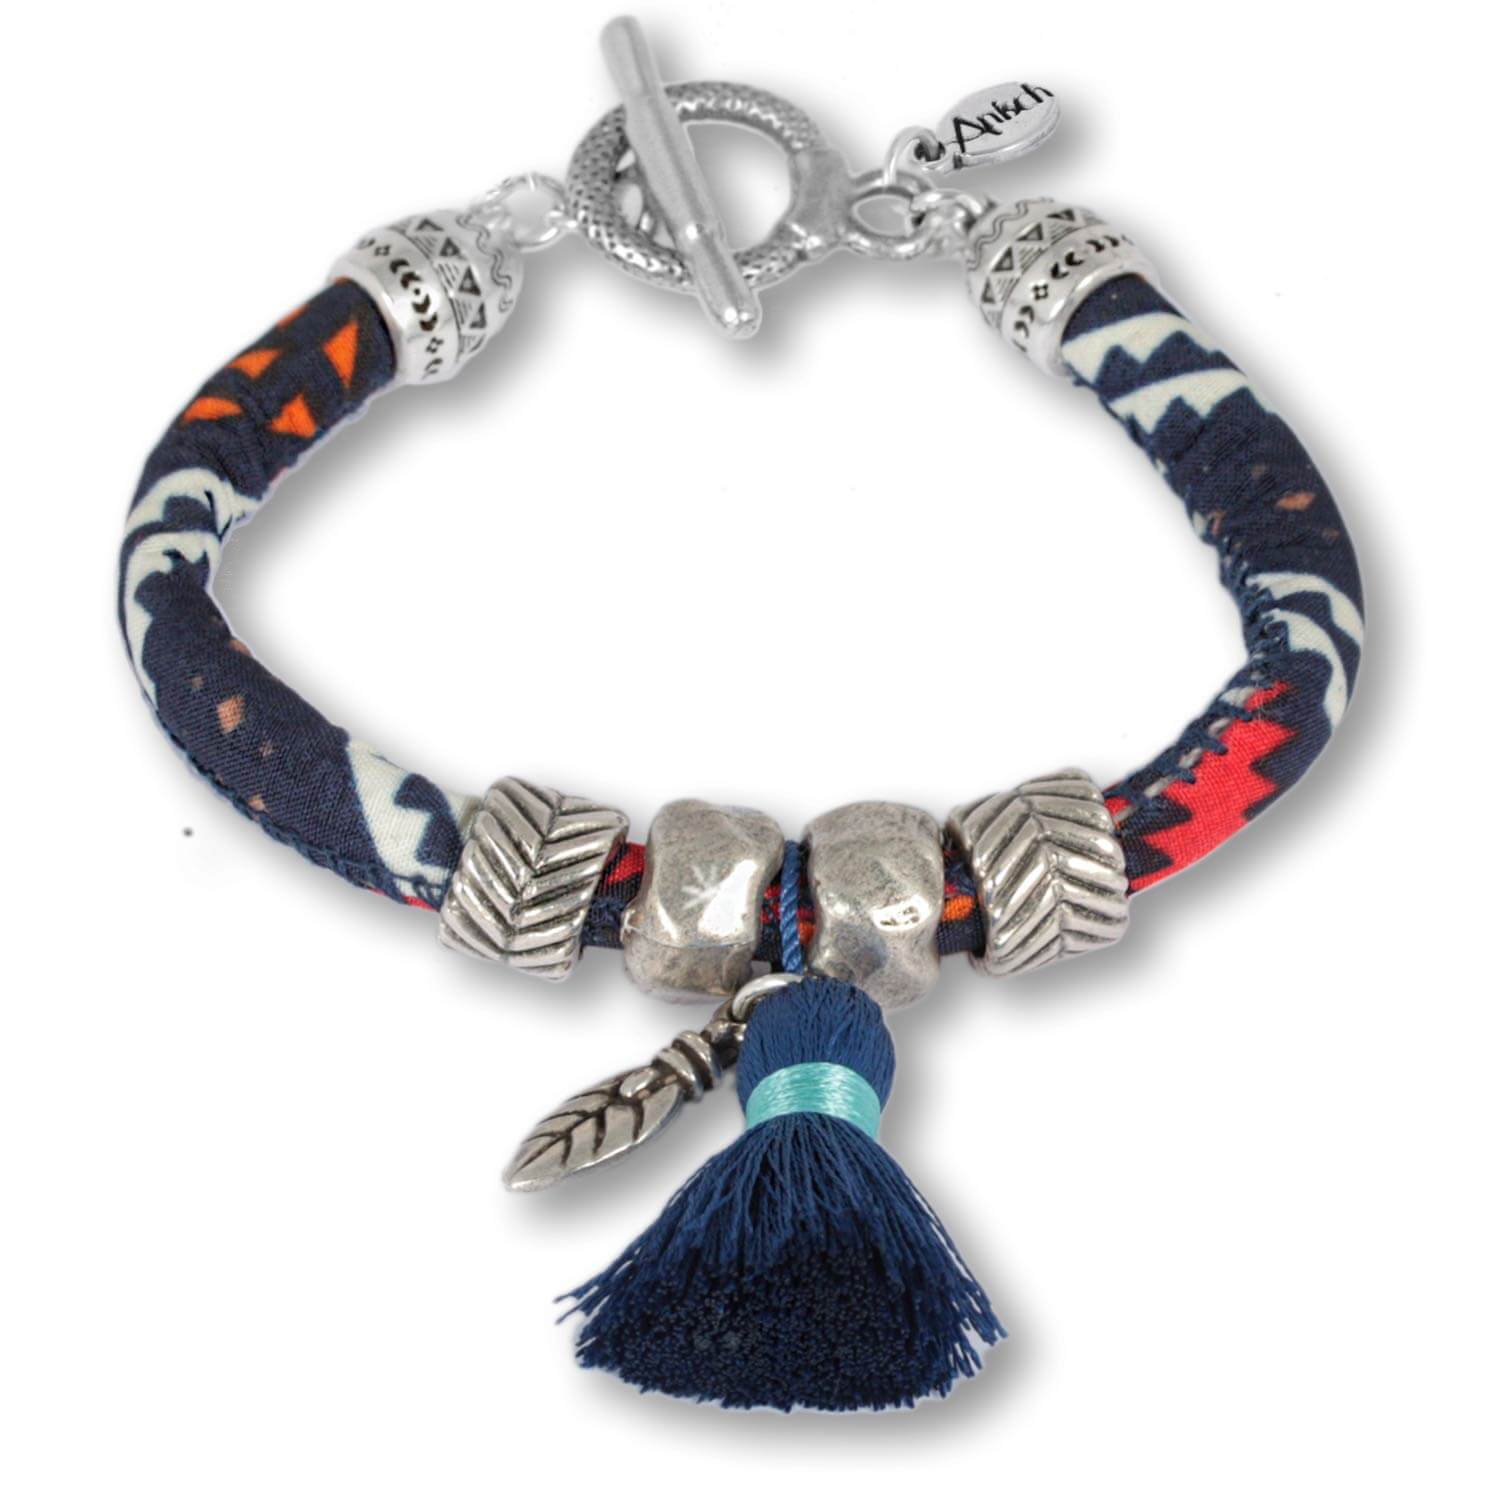 Indigo Feather - Ethno bracelet with traditional patterns